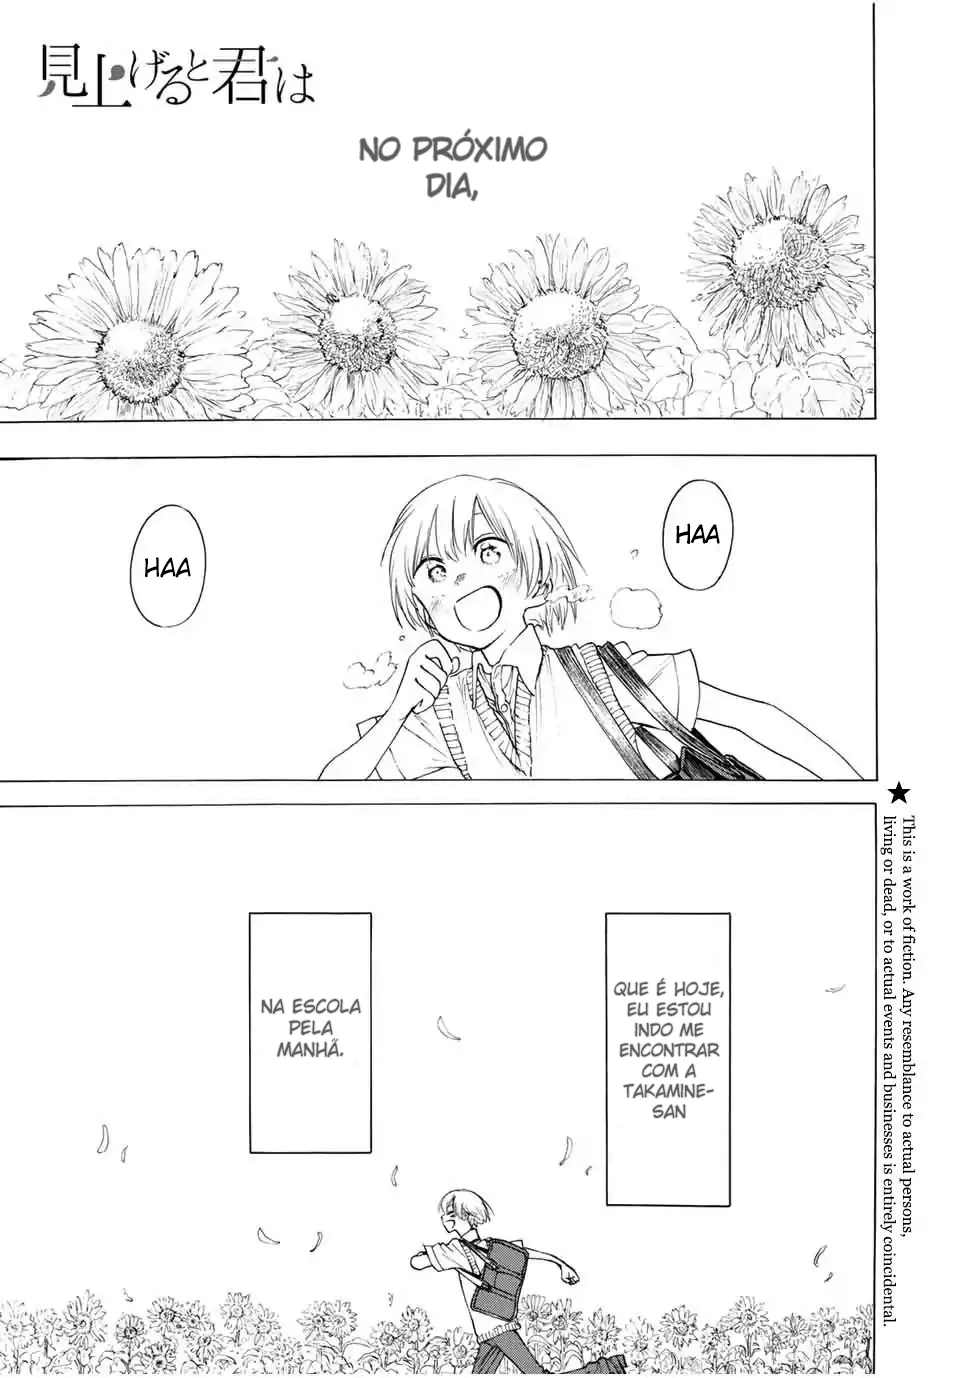 Manga Like Miageru to Kimi wa